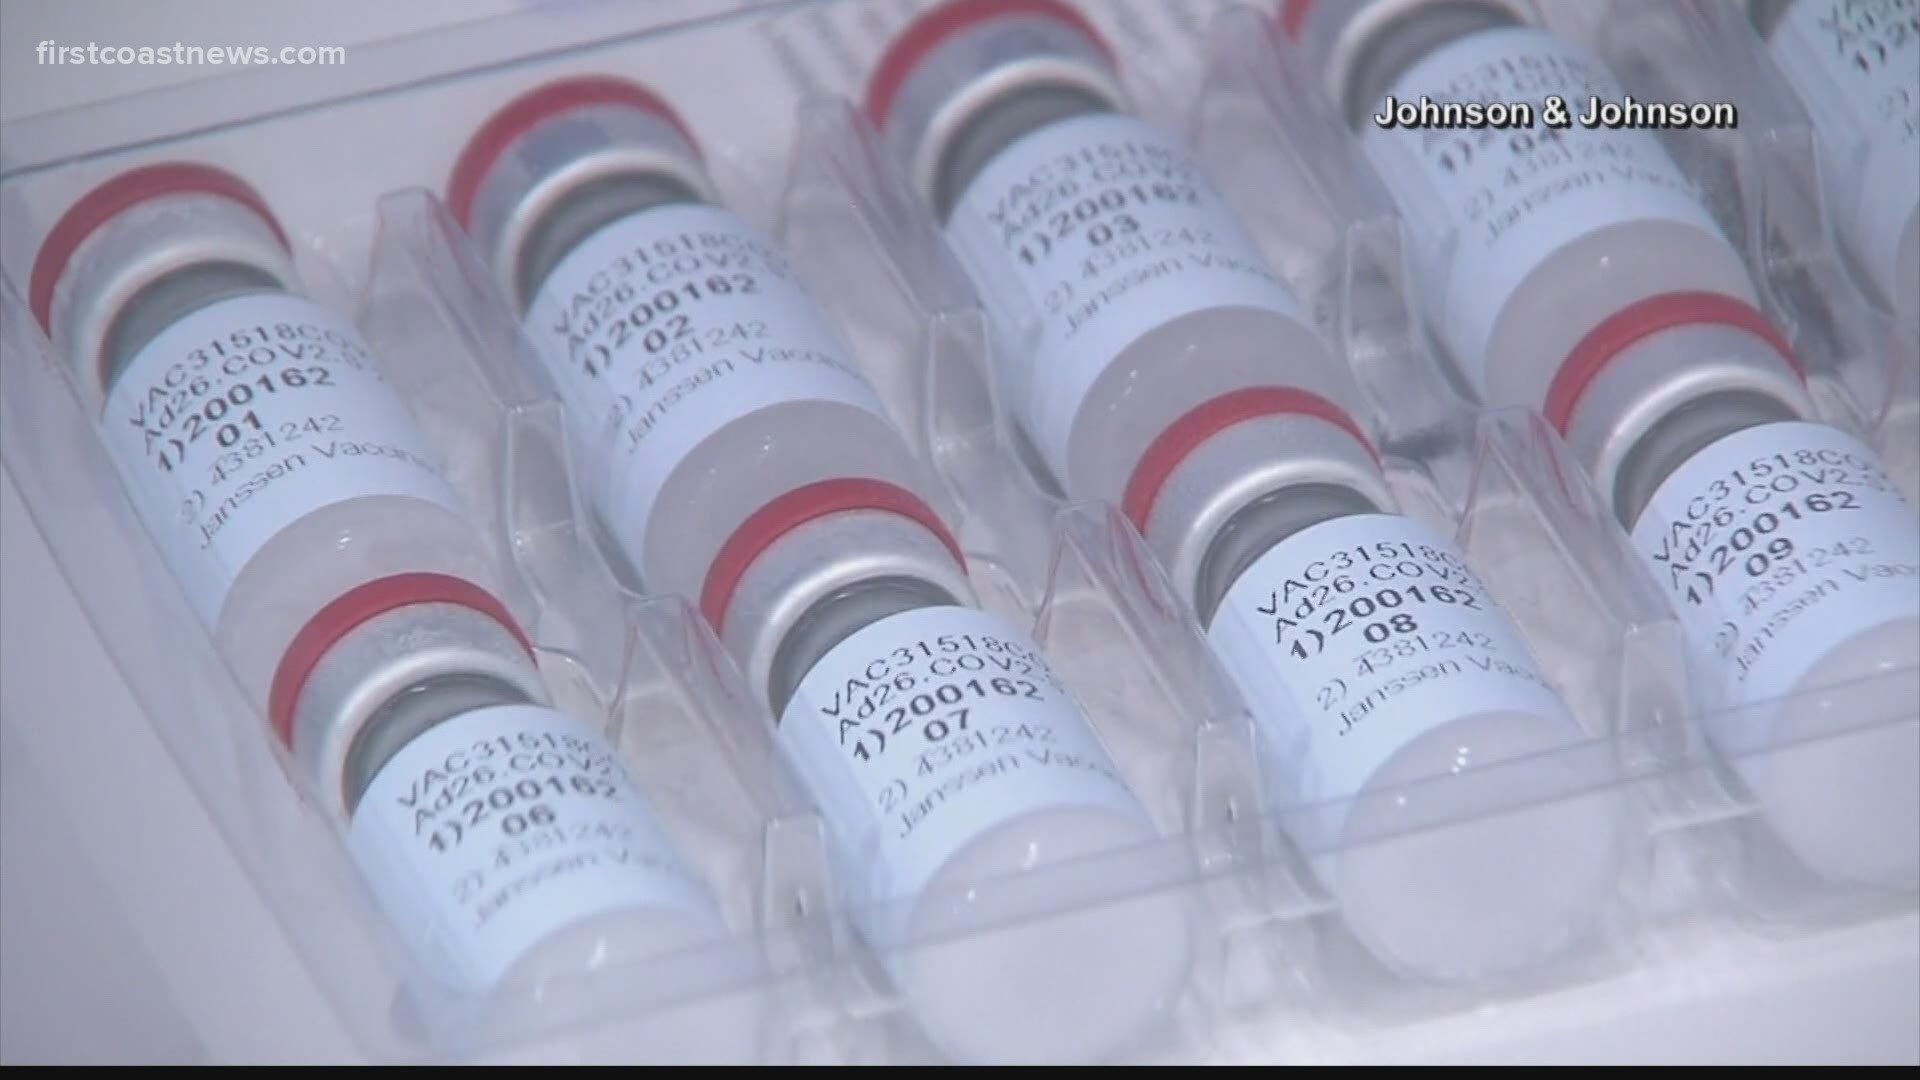 Johnson & Johnson vaccine raising religious concerns